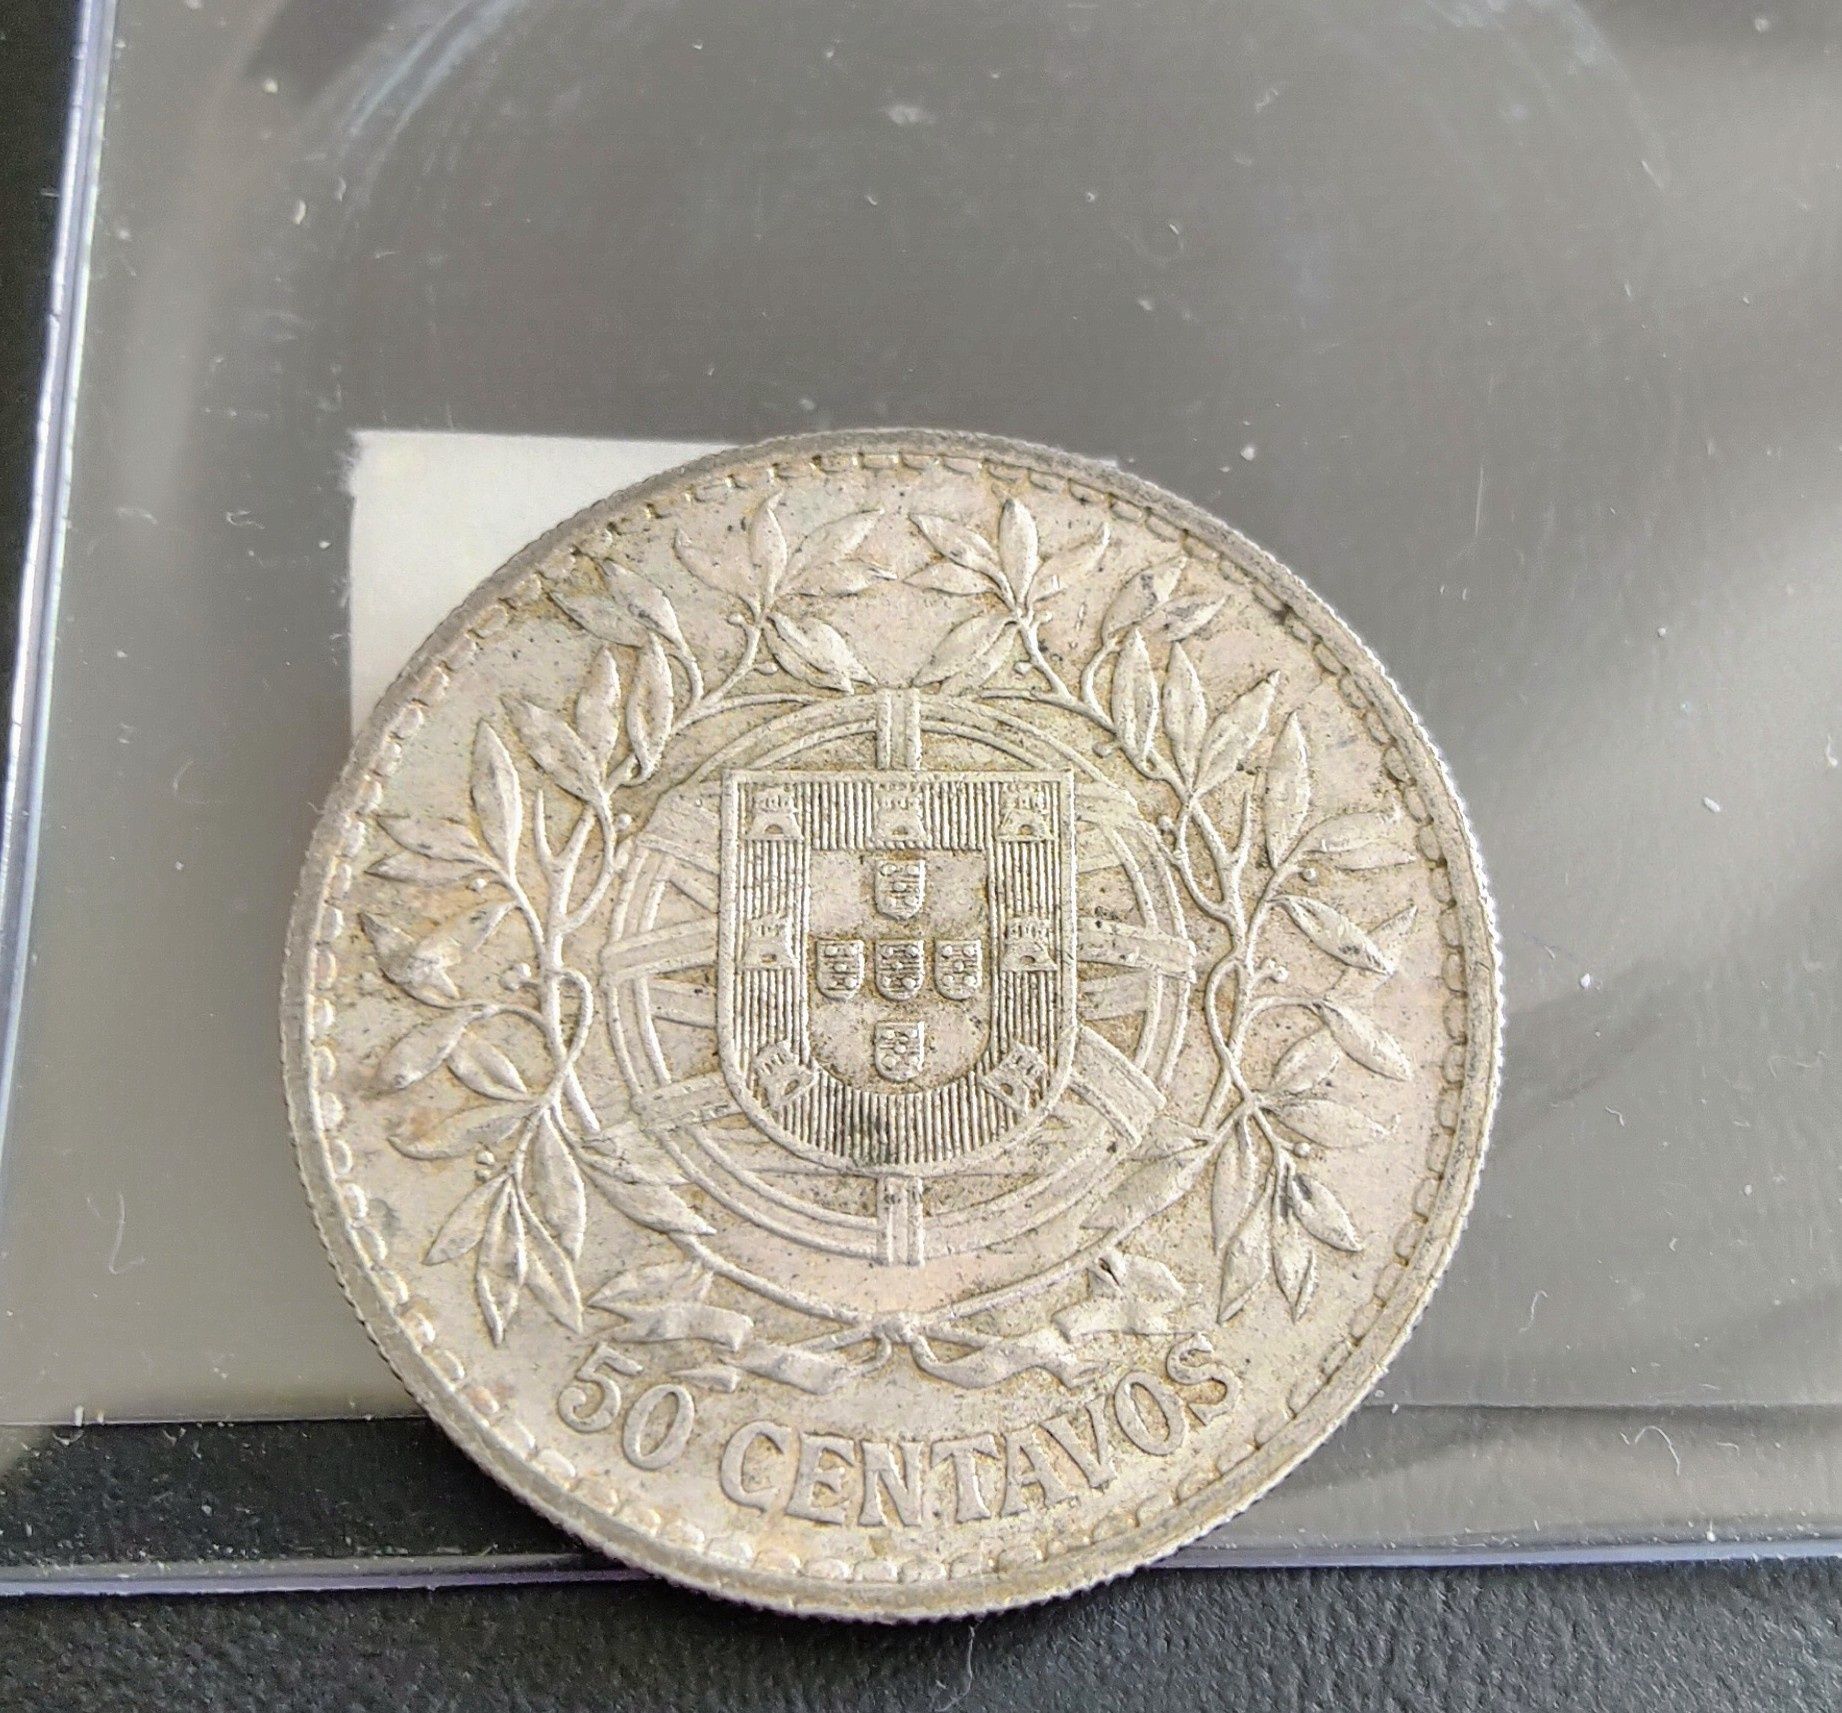 Moeda 50 centavos prata 1912